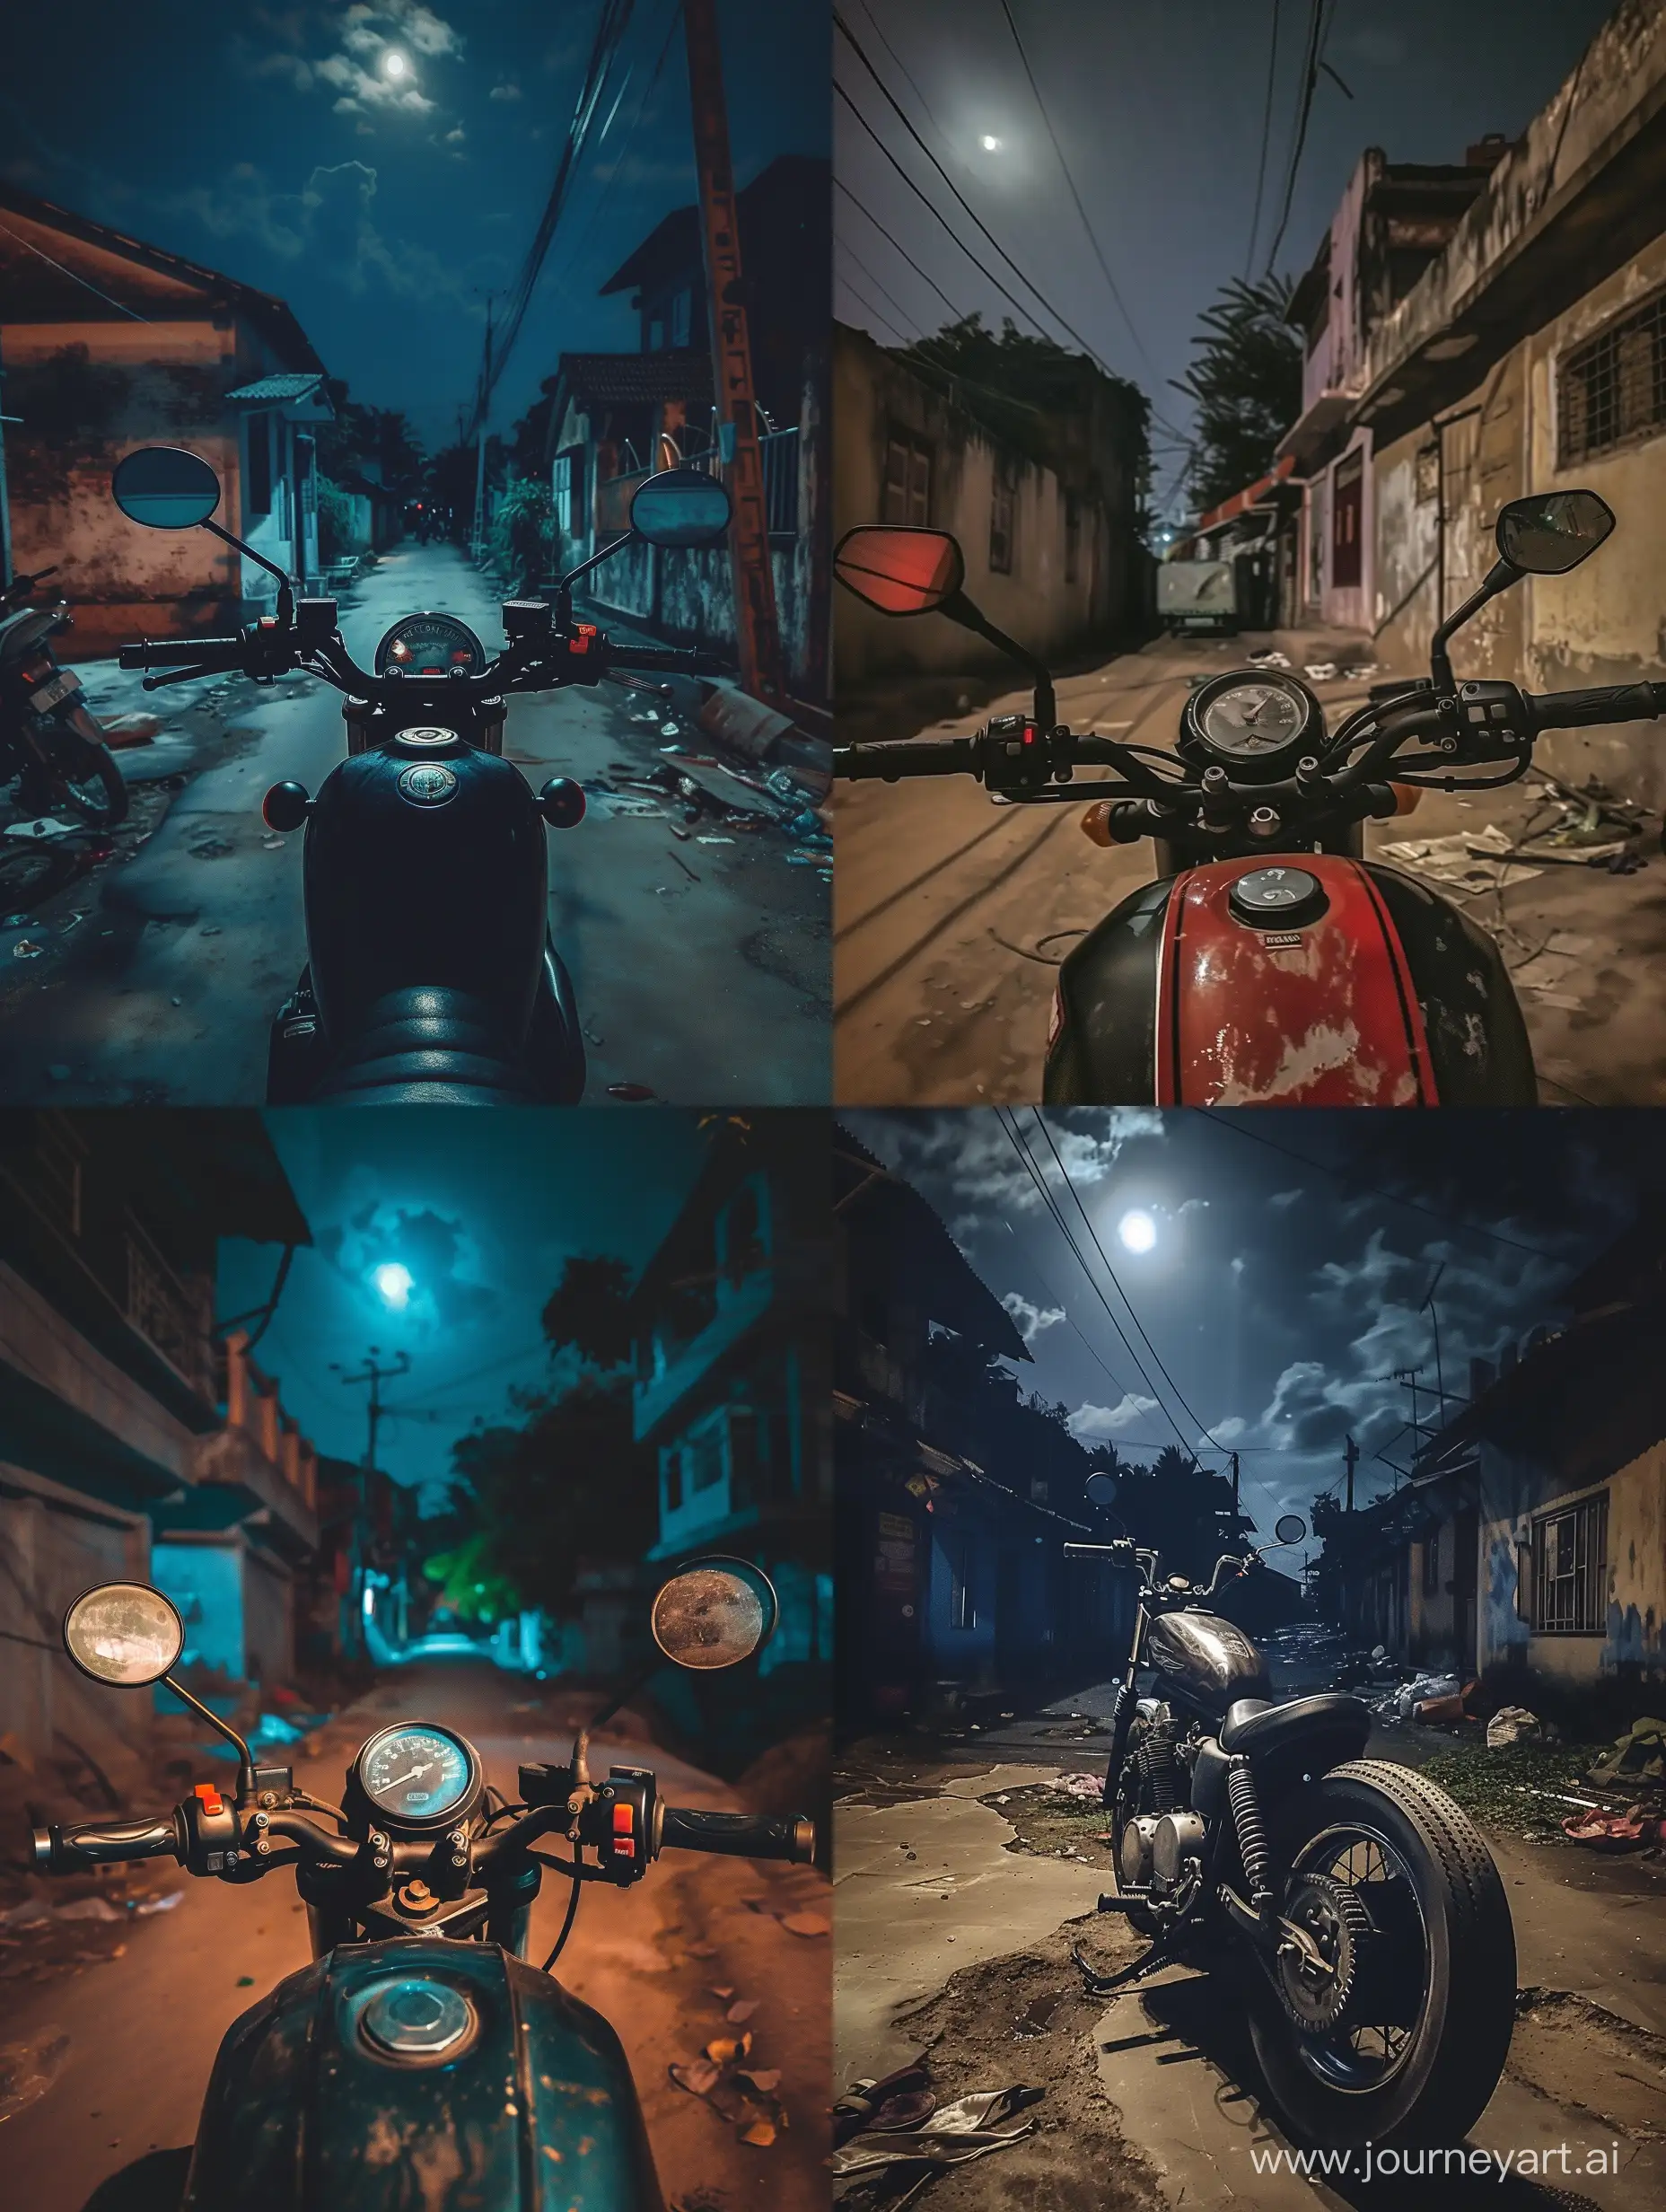 Motorcycle-under-Moonlight-Nighttime-Scene-in-an-Old-Neighborhood